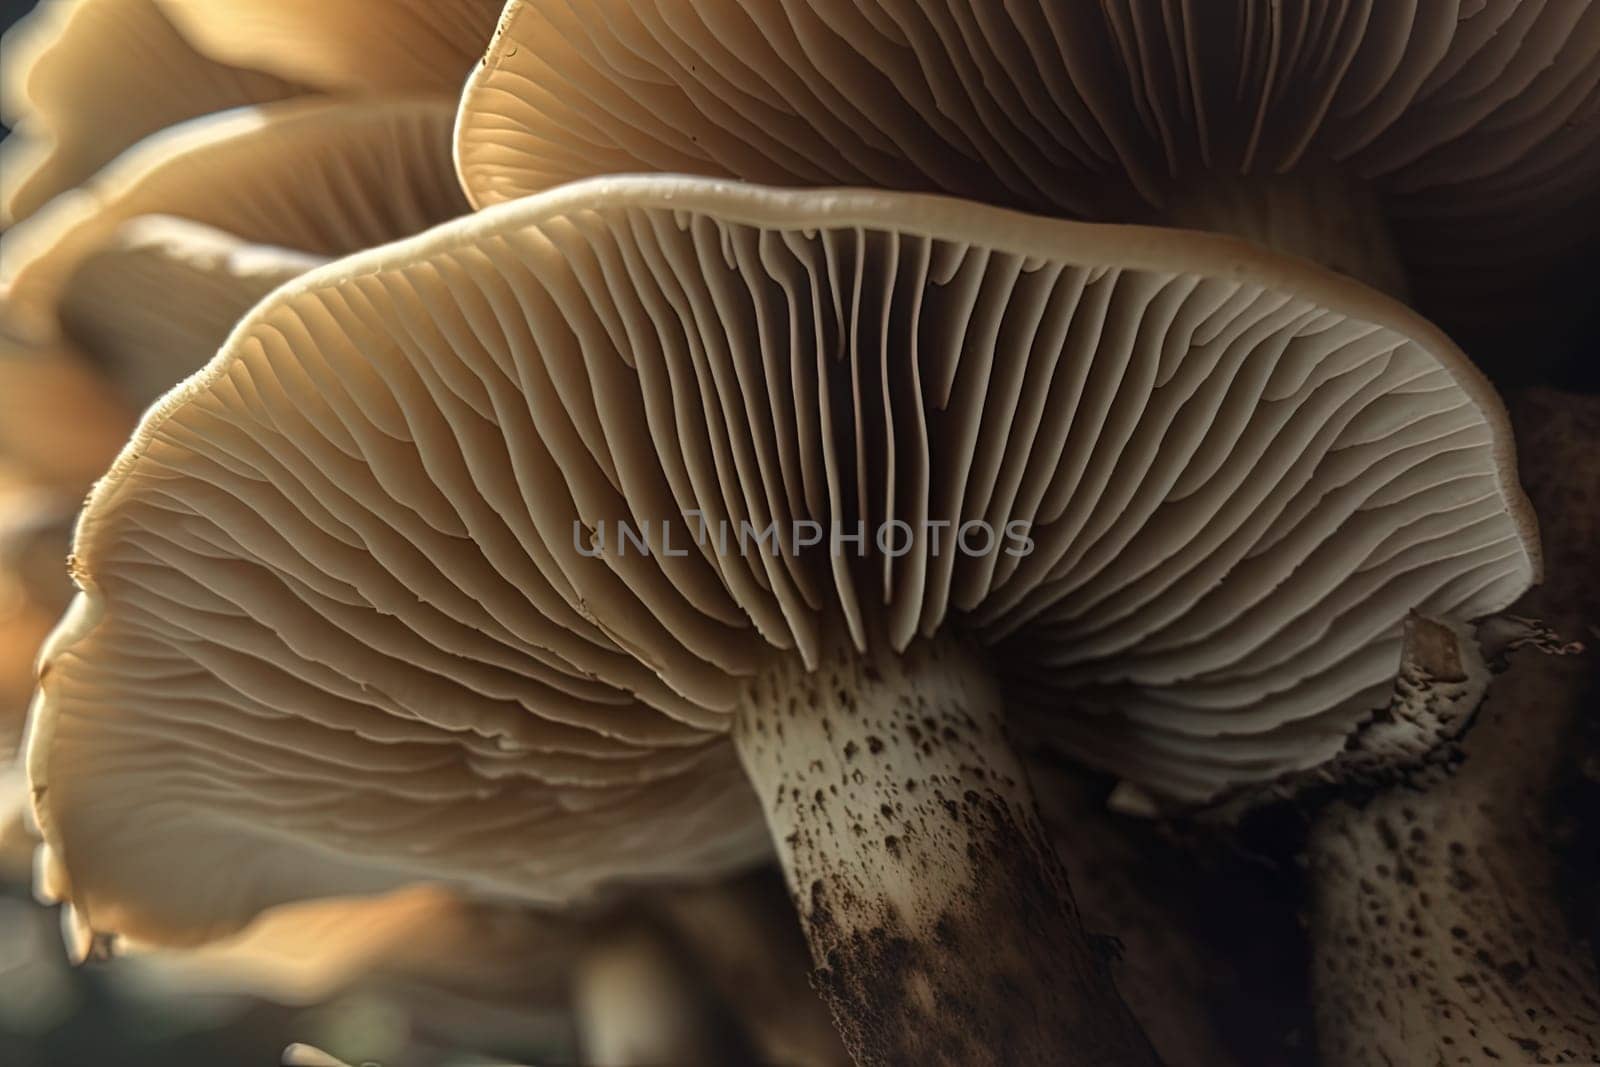 Abstract boletus mushroom. Big fungus with mushroom plates close up image. Generated AI